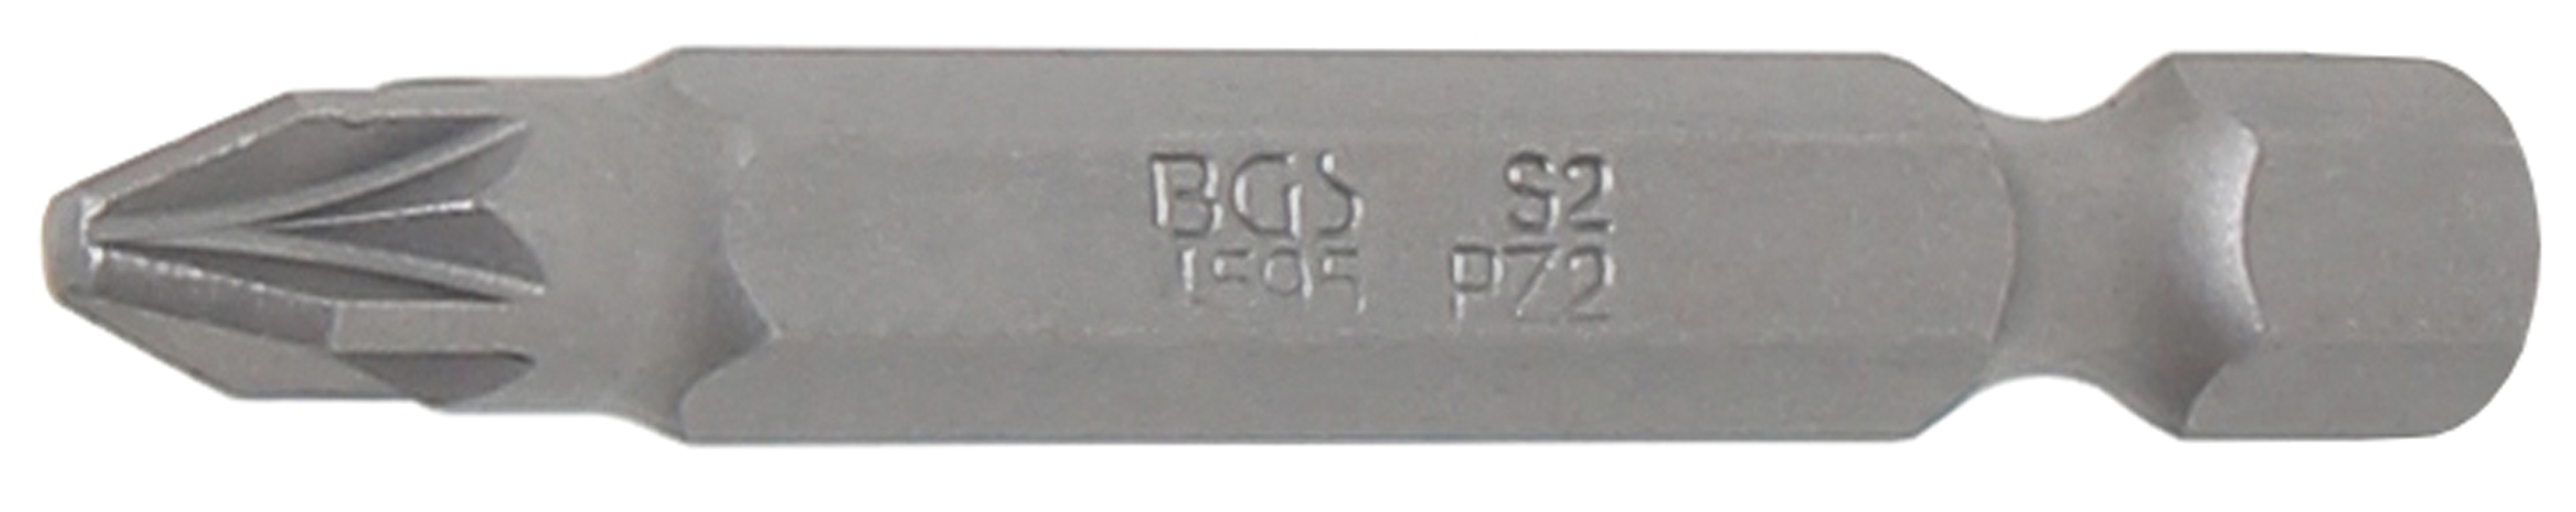 BGS 4595 Bit Pozidrive PZ2, lungime 50 mm, antrenare 1/4"